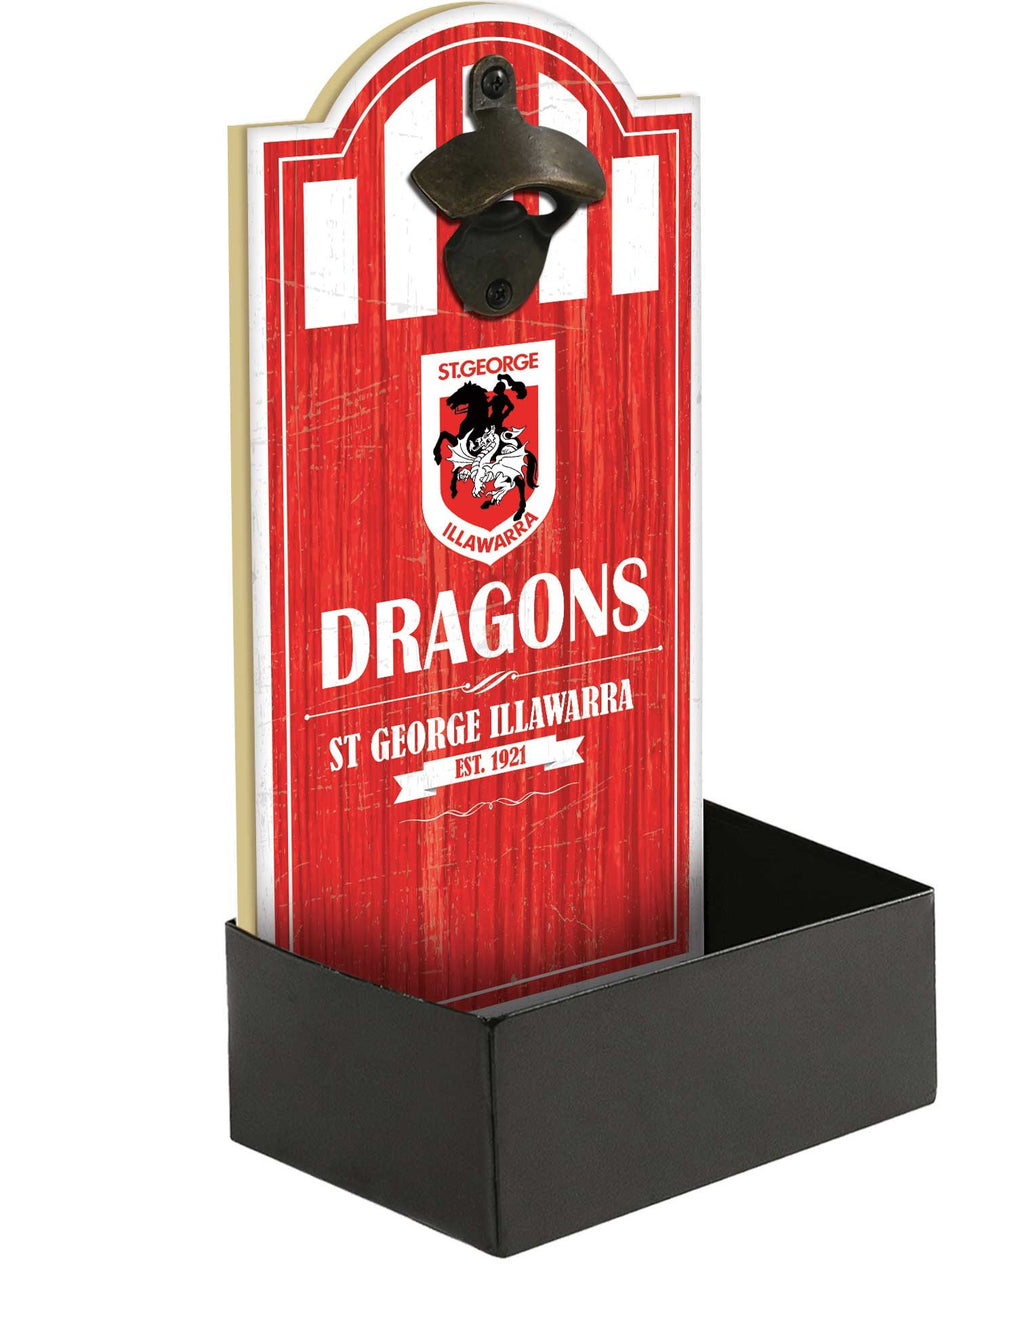 St George Illawarra Dragons Bottle Opener with Catcher